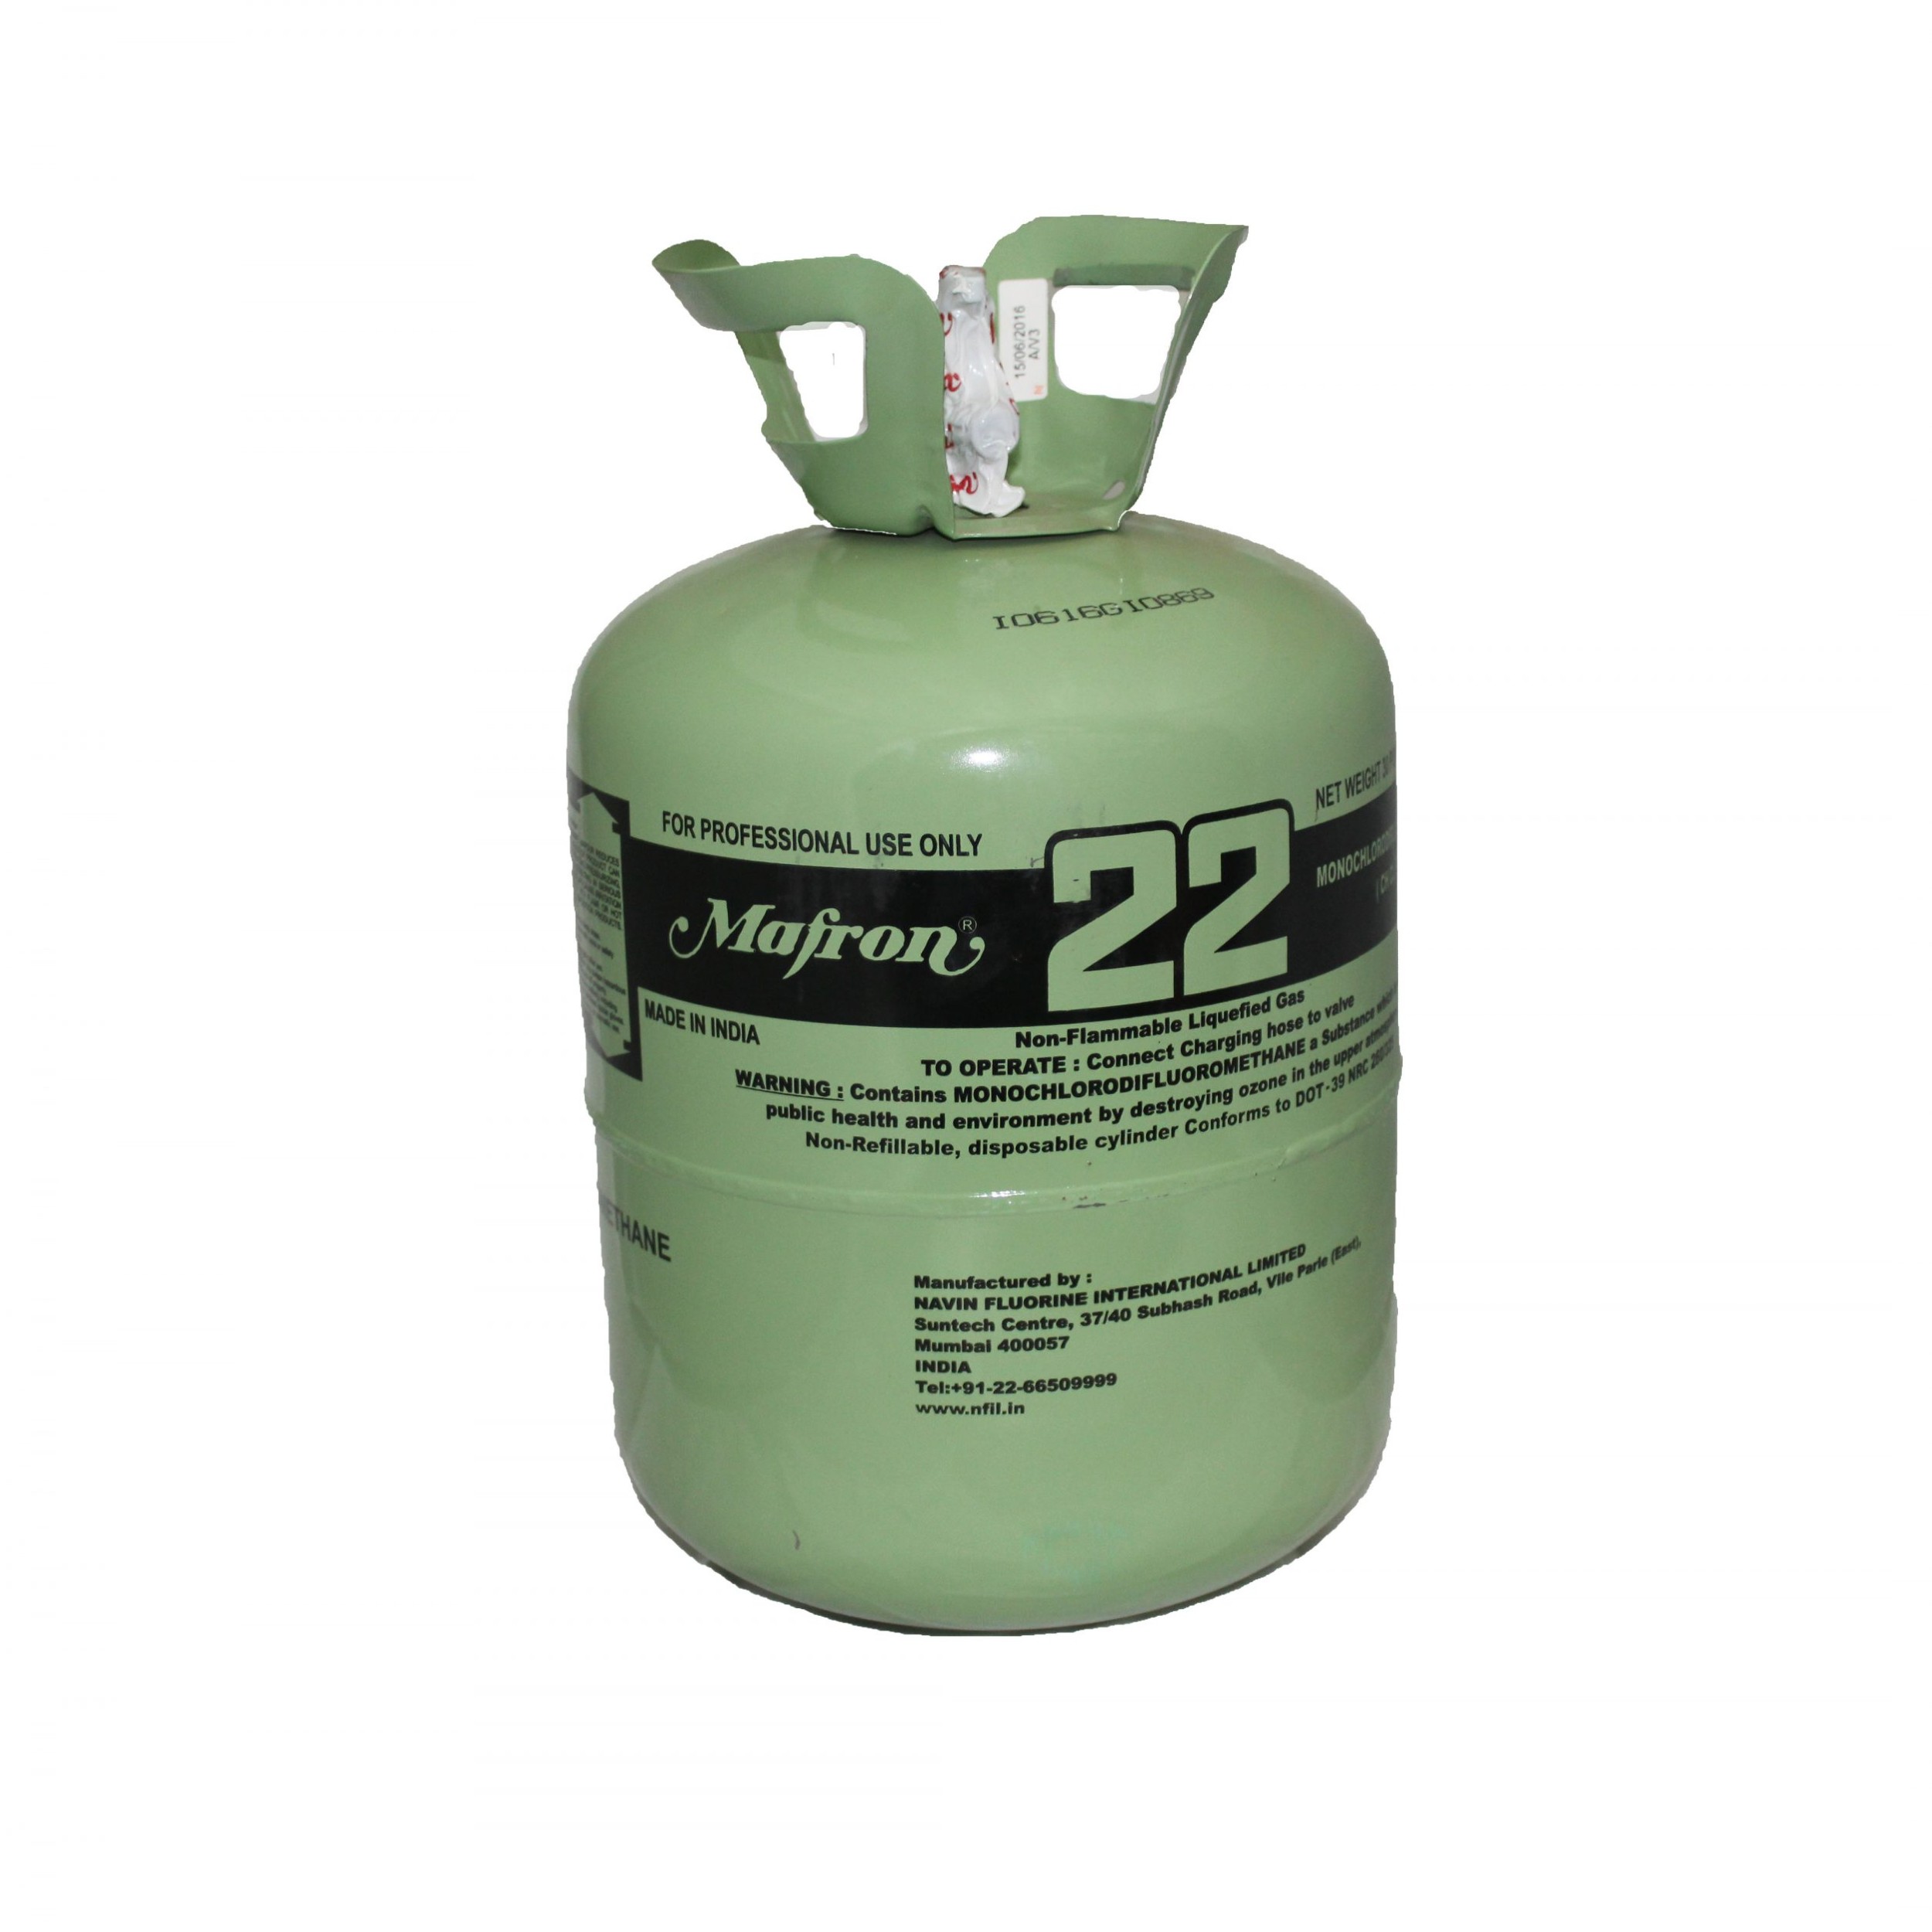 گاز کمپرسور مافرون کد R22 حجم 13.6 کیلوگرم